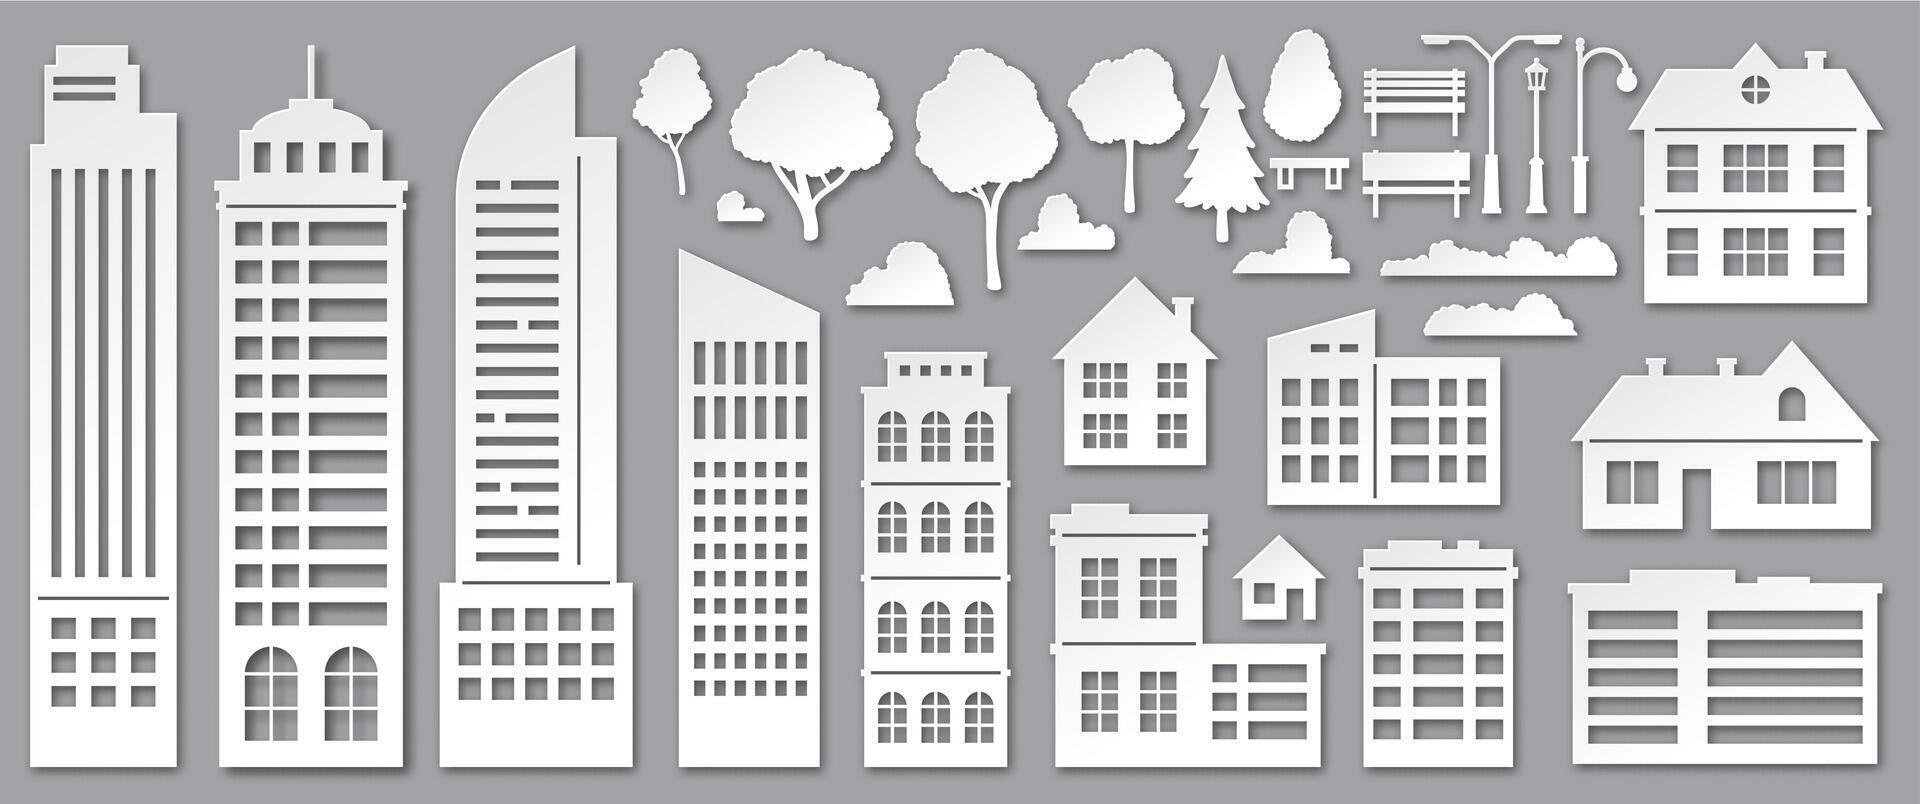 papel cortar cidade edifícios. origami arranha-céus, Cidade casas, Vila chalés e parque árvores silhuetas. urbano panorama elementos vetor conjunto